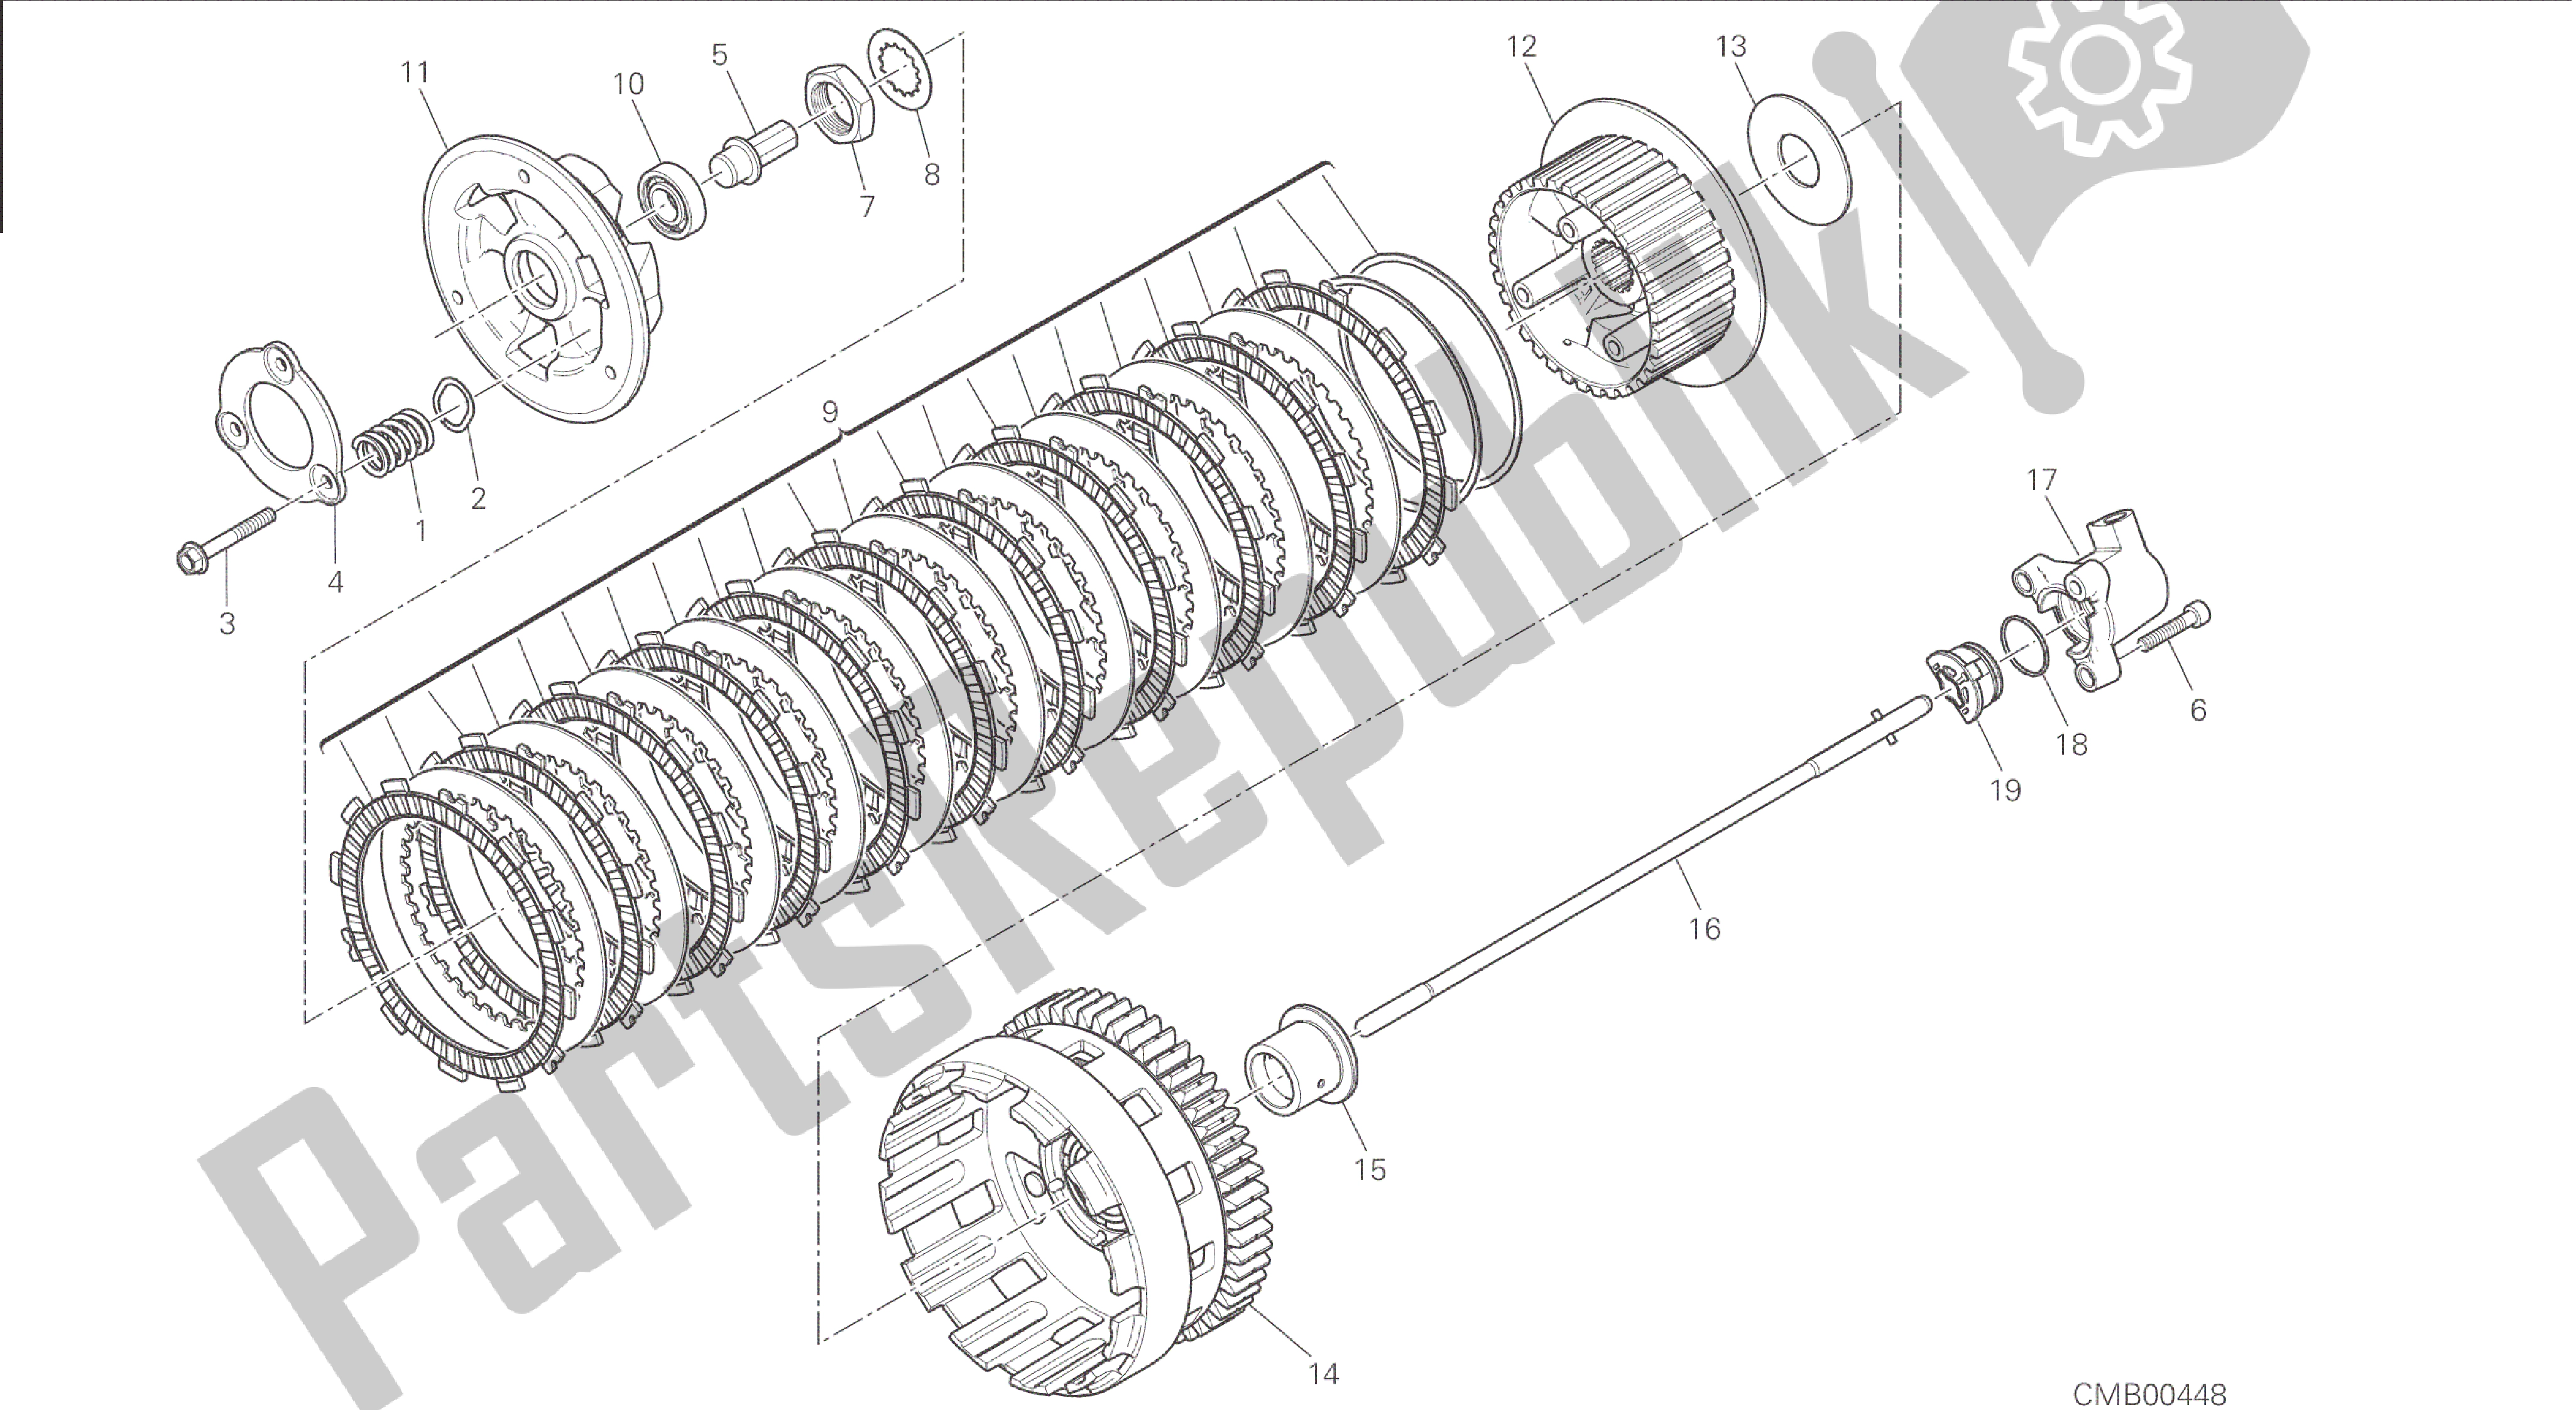 Alle onderdelen voor de Tekening 004 - Koppeling [mod: 1199 R; Xst: Aus, Eur, Fra, Jap, Twn] Groepsmotor van de Ducati Panigale 1198 2015